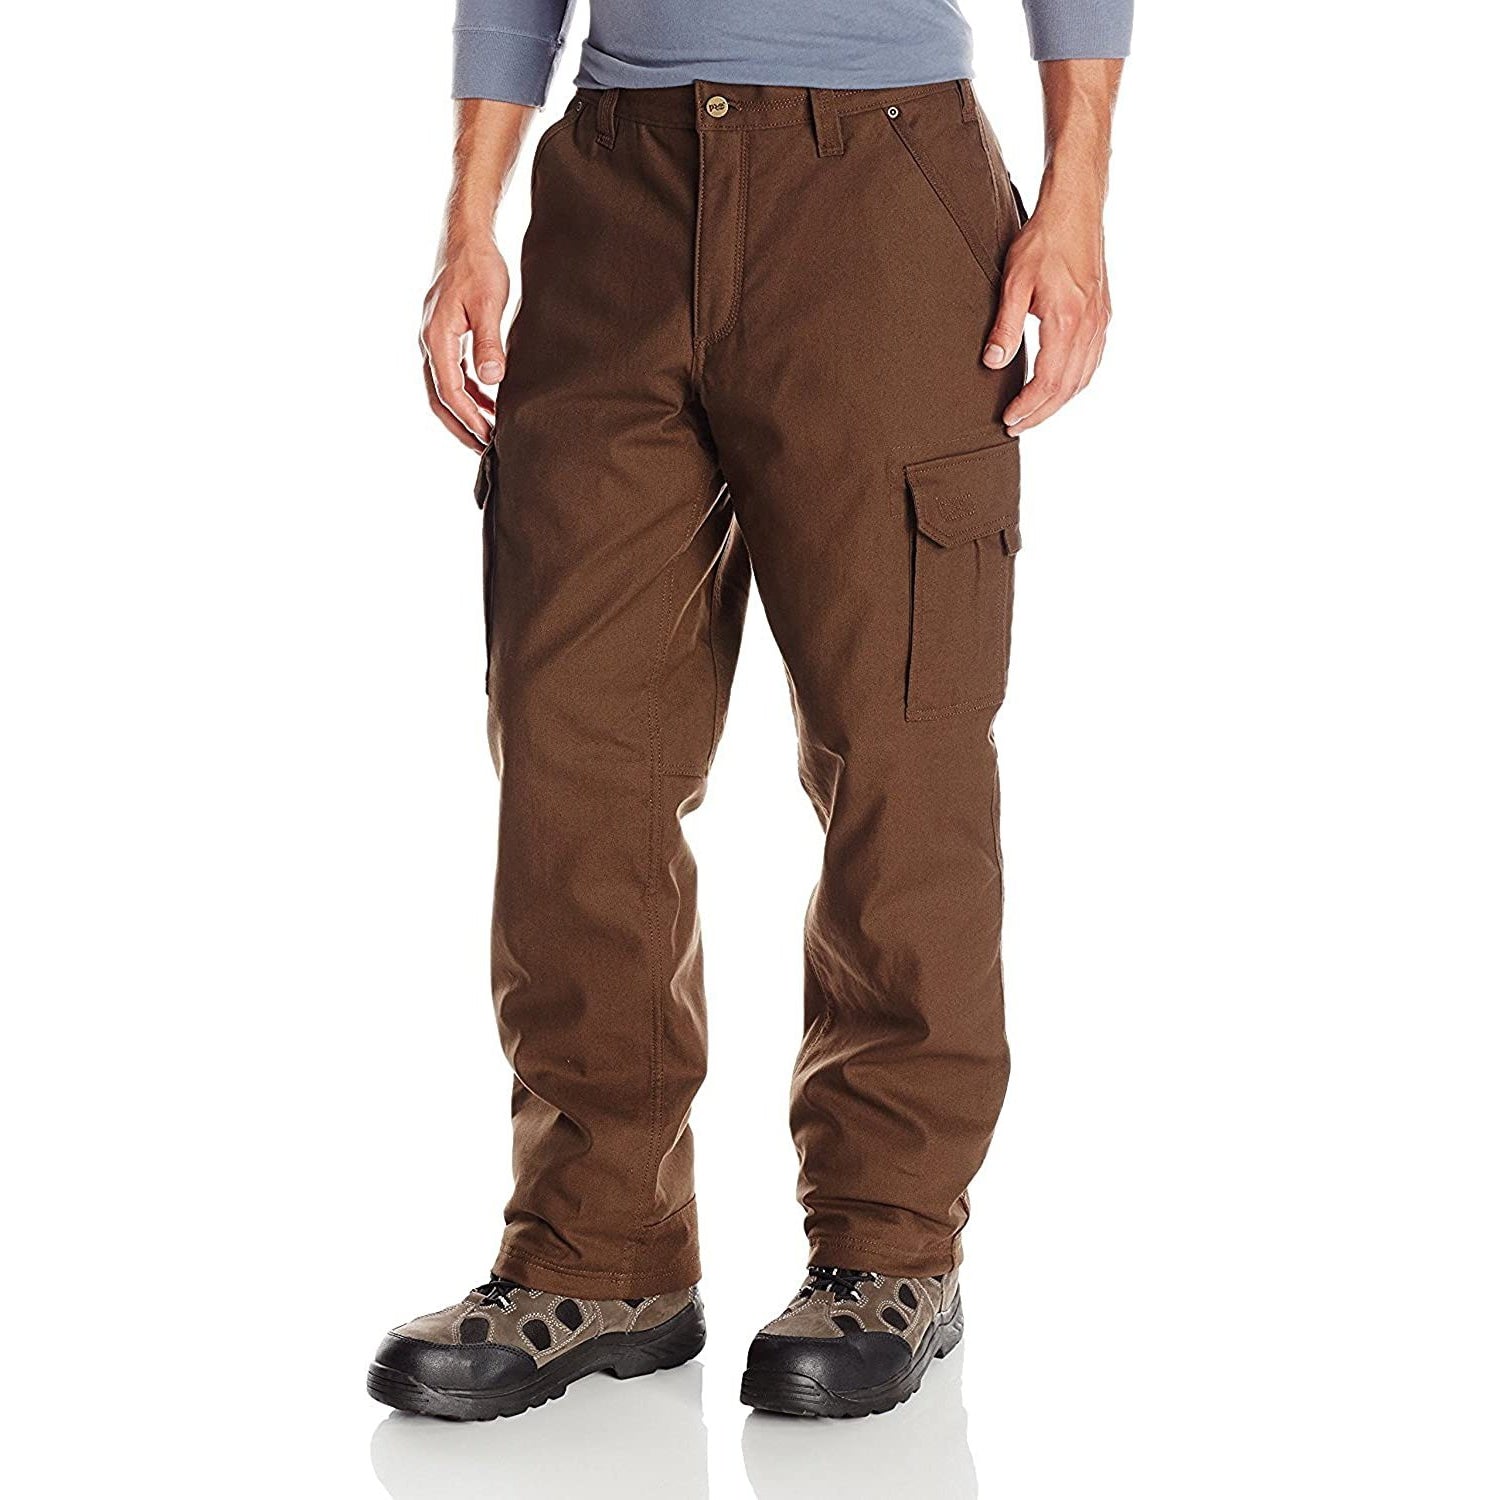 Timberland Pro Men's Gridflex Canvas Work Pants - Dark Brown - TB0A118I242 30 x 32 / Brown - Overlook Boots